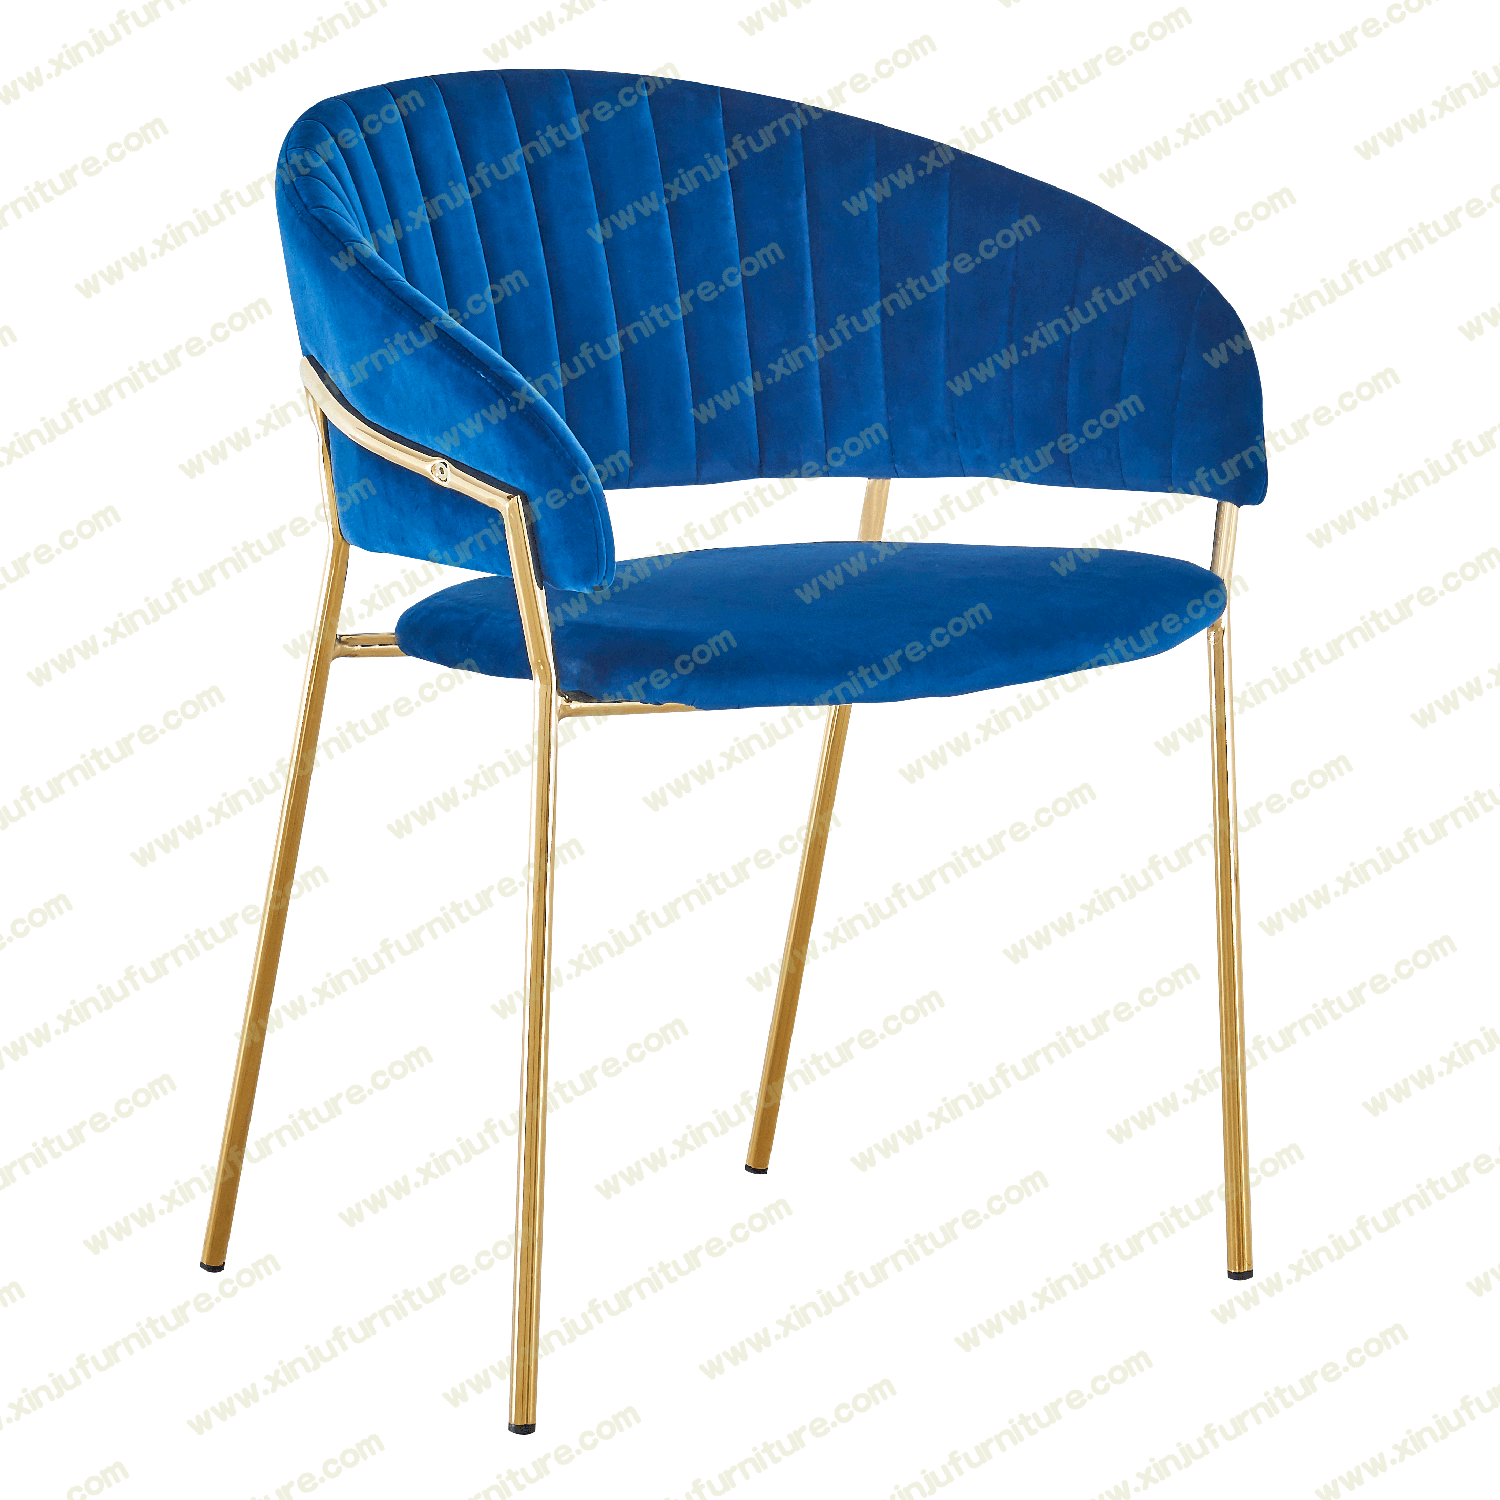 Simple modern dark blue dining chair